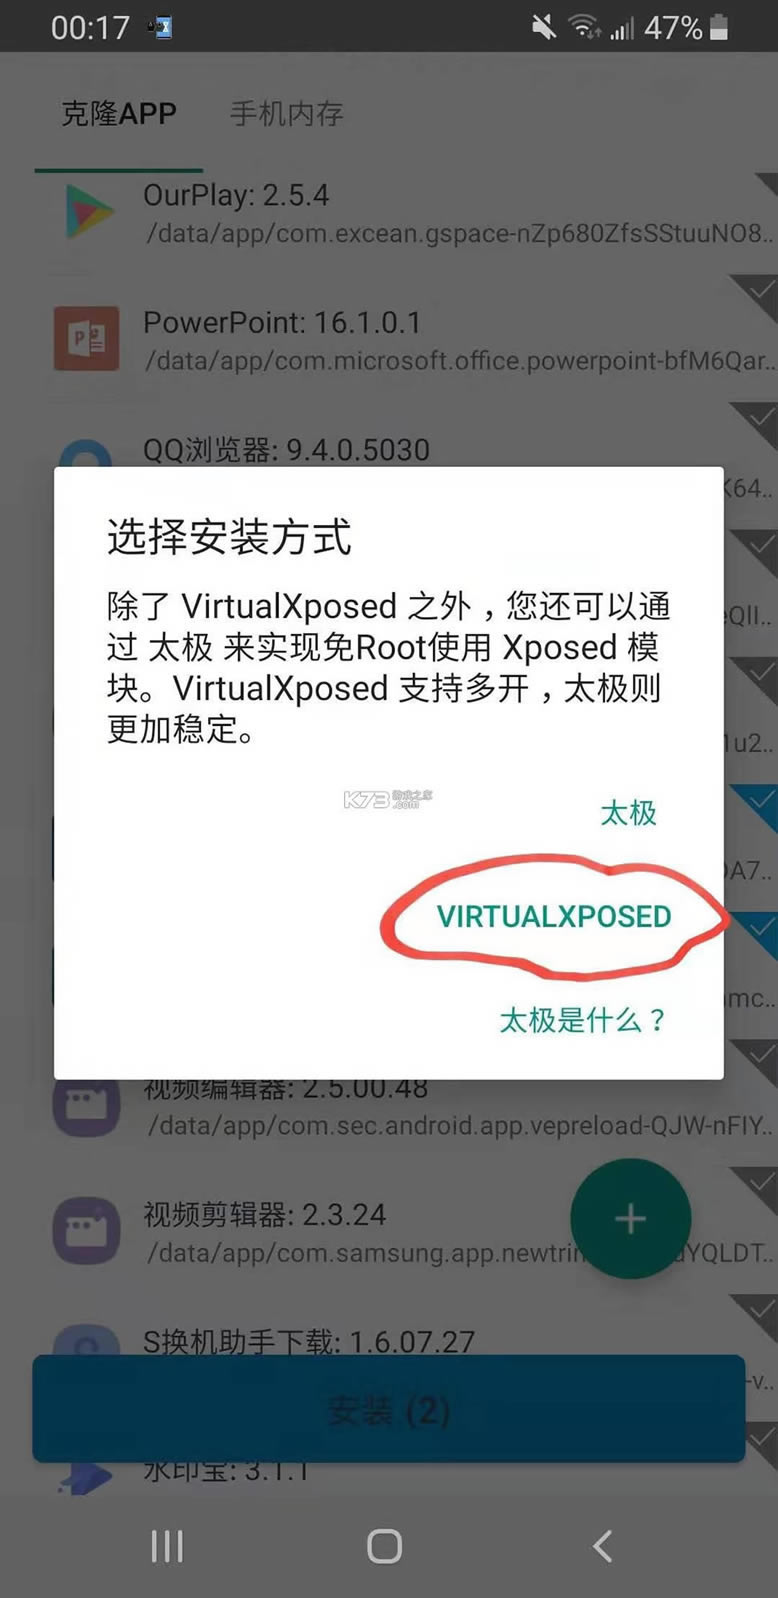 VirtualXposed gg޸ v0.20.3 רð